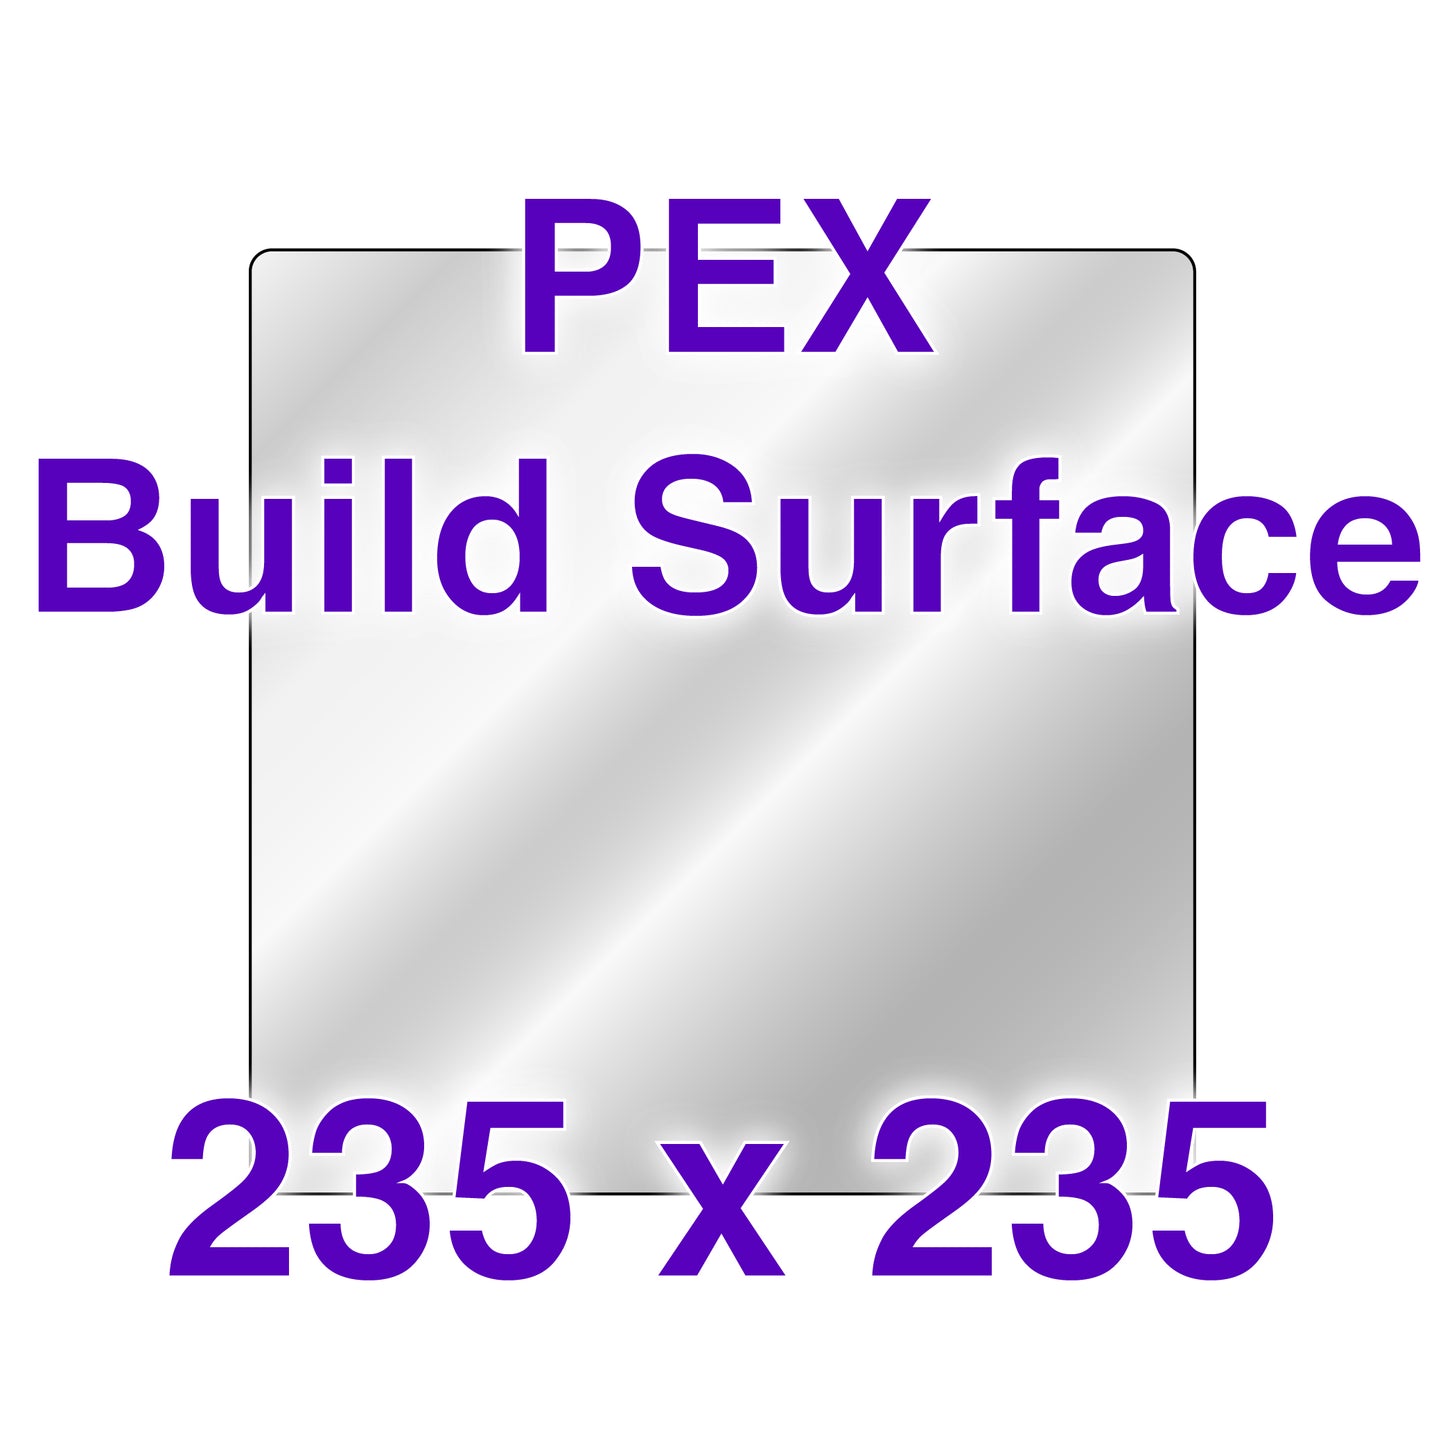 PEX Build Surface - 235 x 235